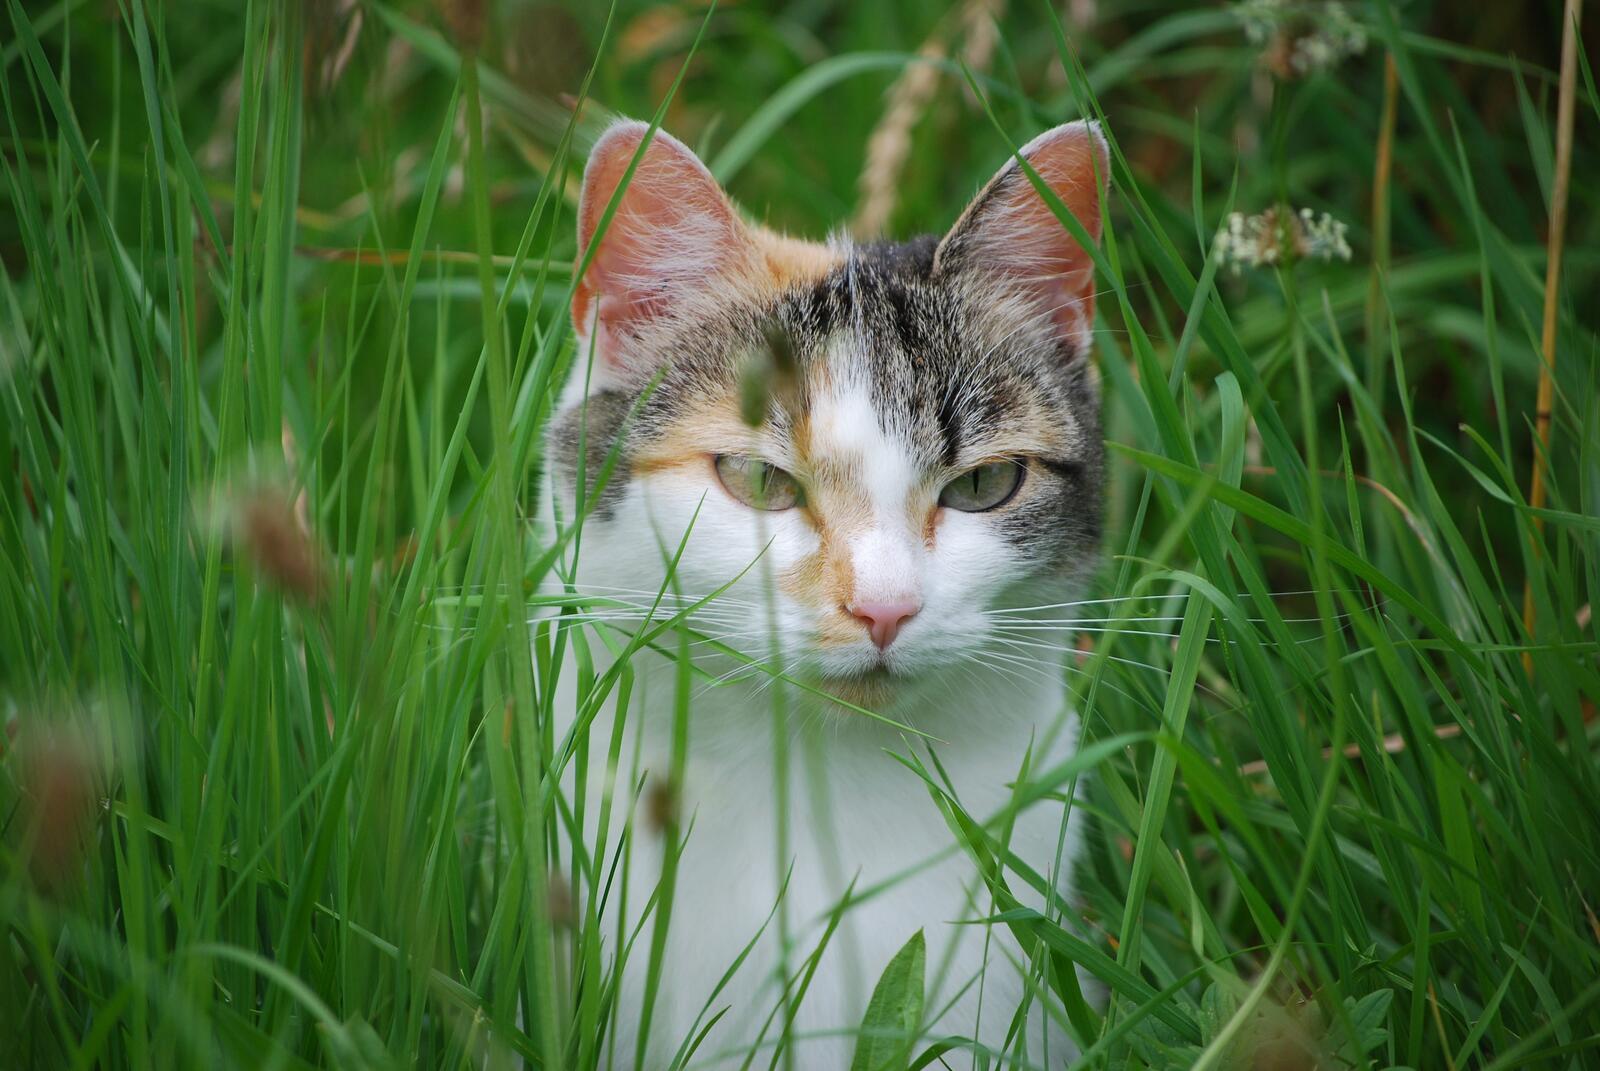 Wallpapers cats grass animals sight on the desktop